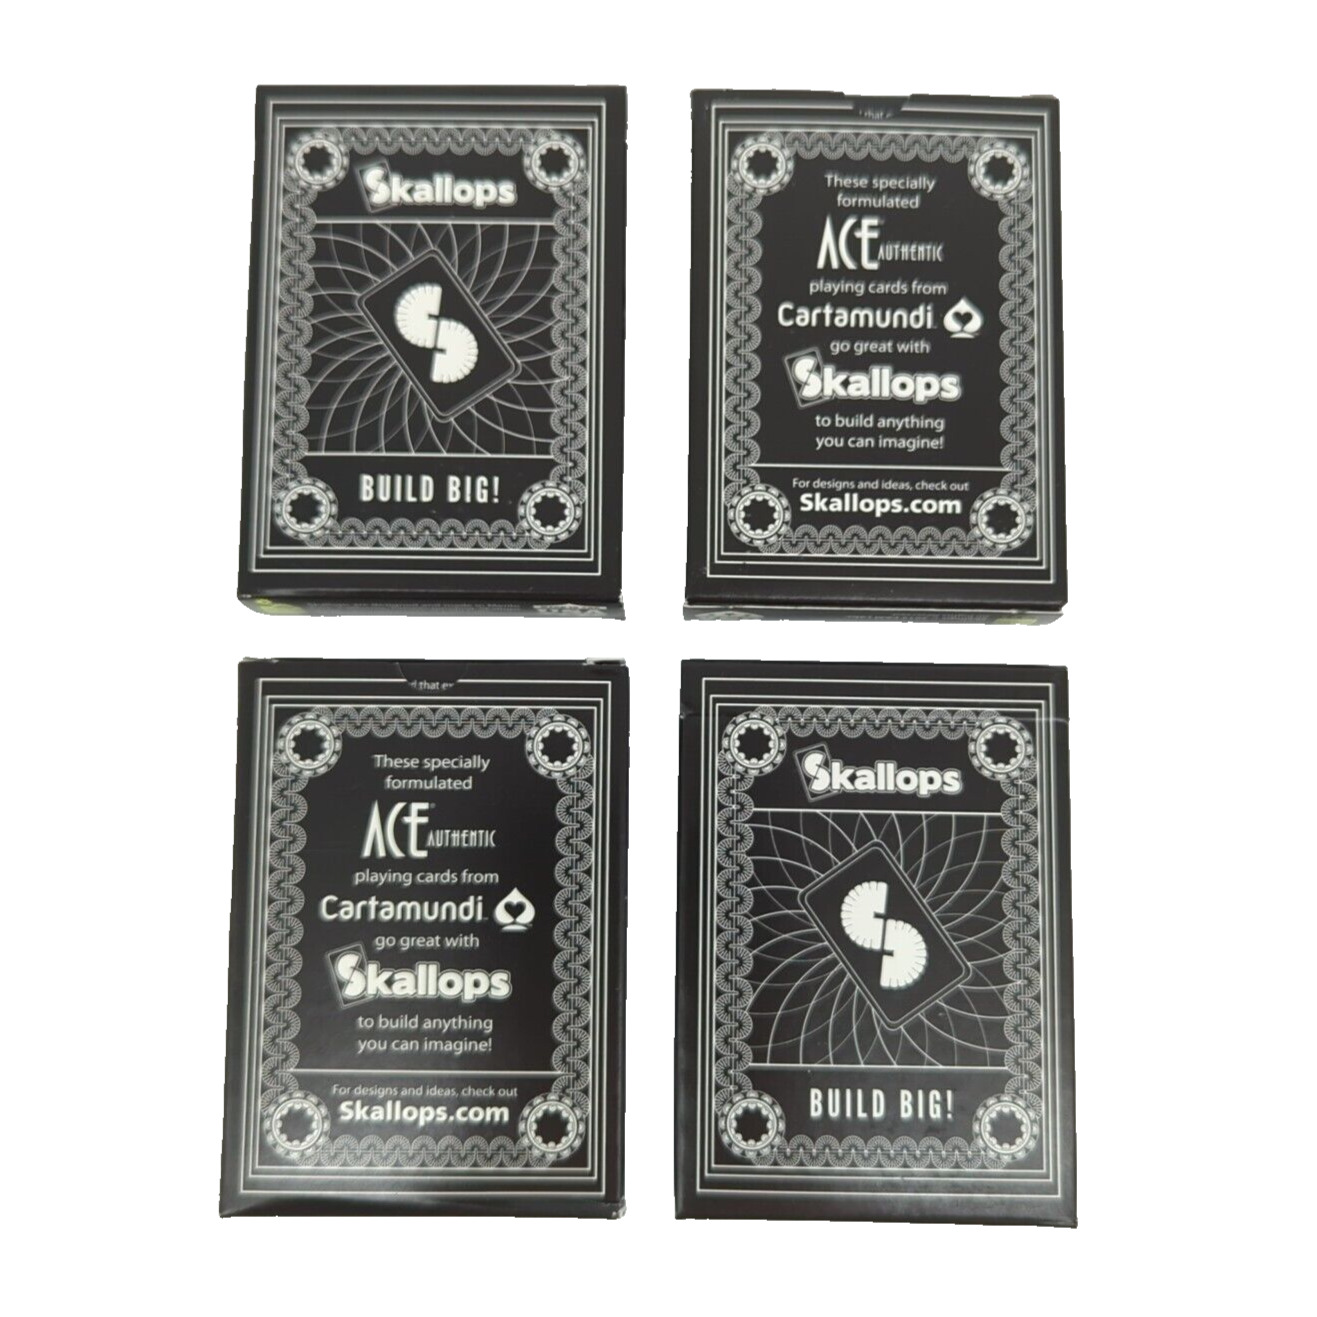 Ace Authentic Cartamundi Skallops Black Playing Cards Building 4 Brand New Decks